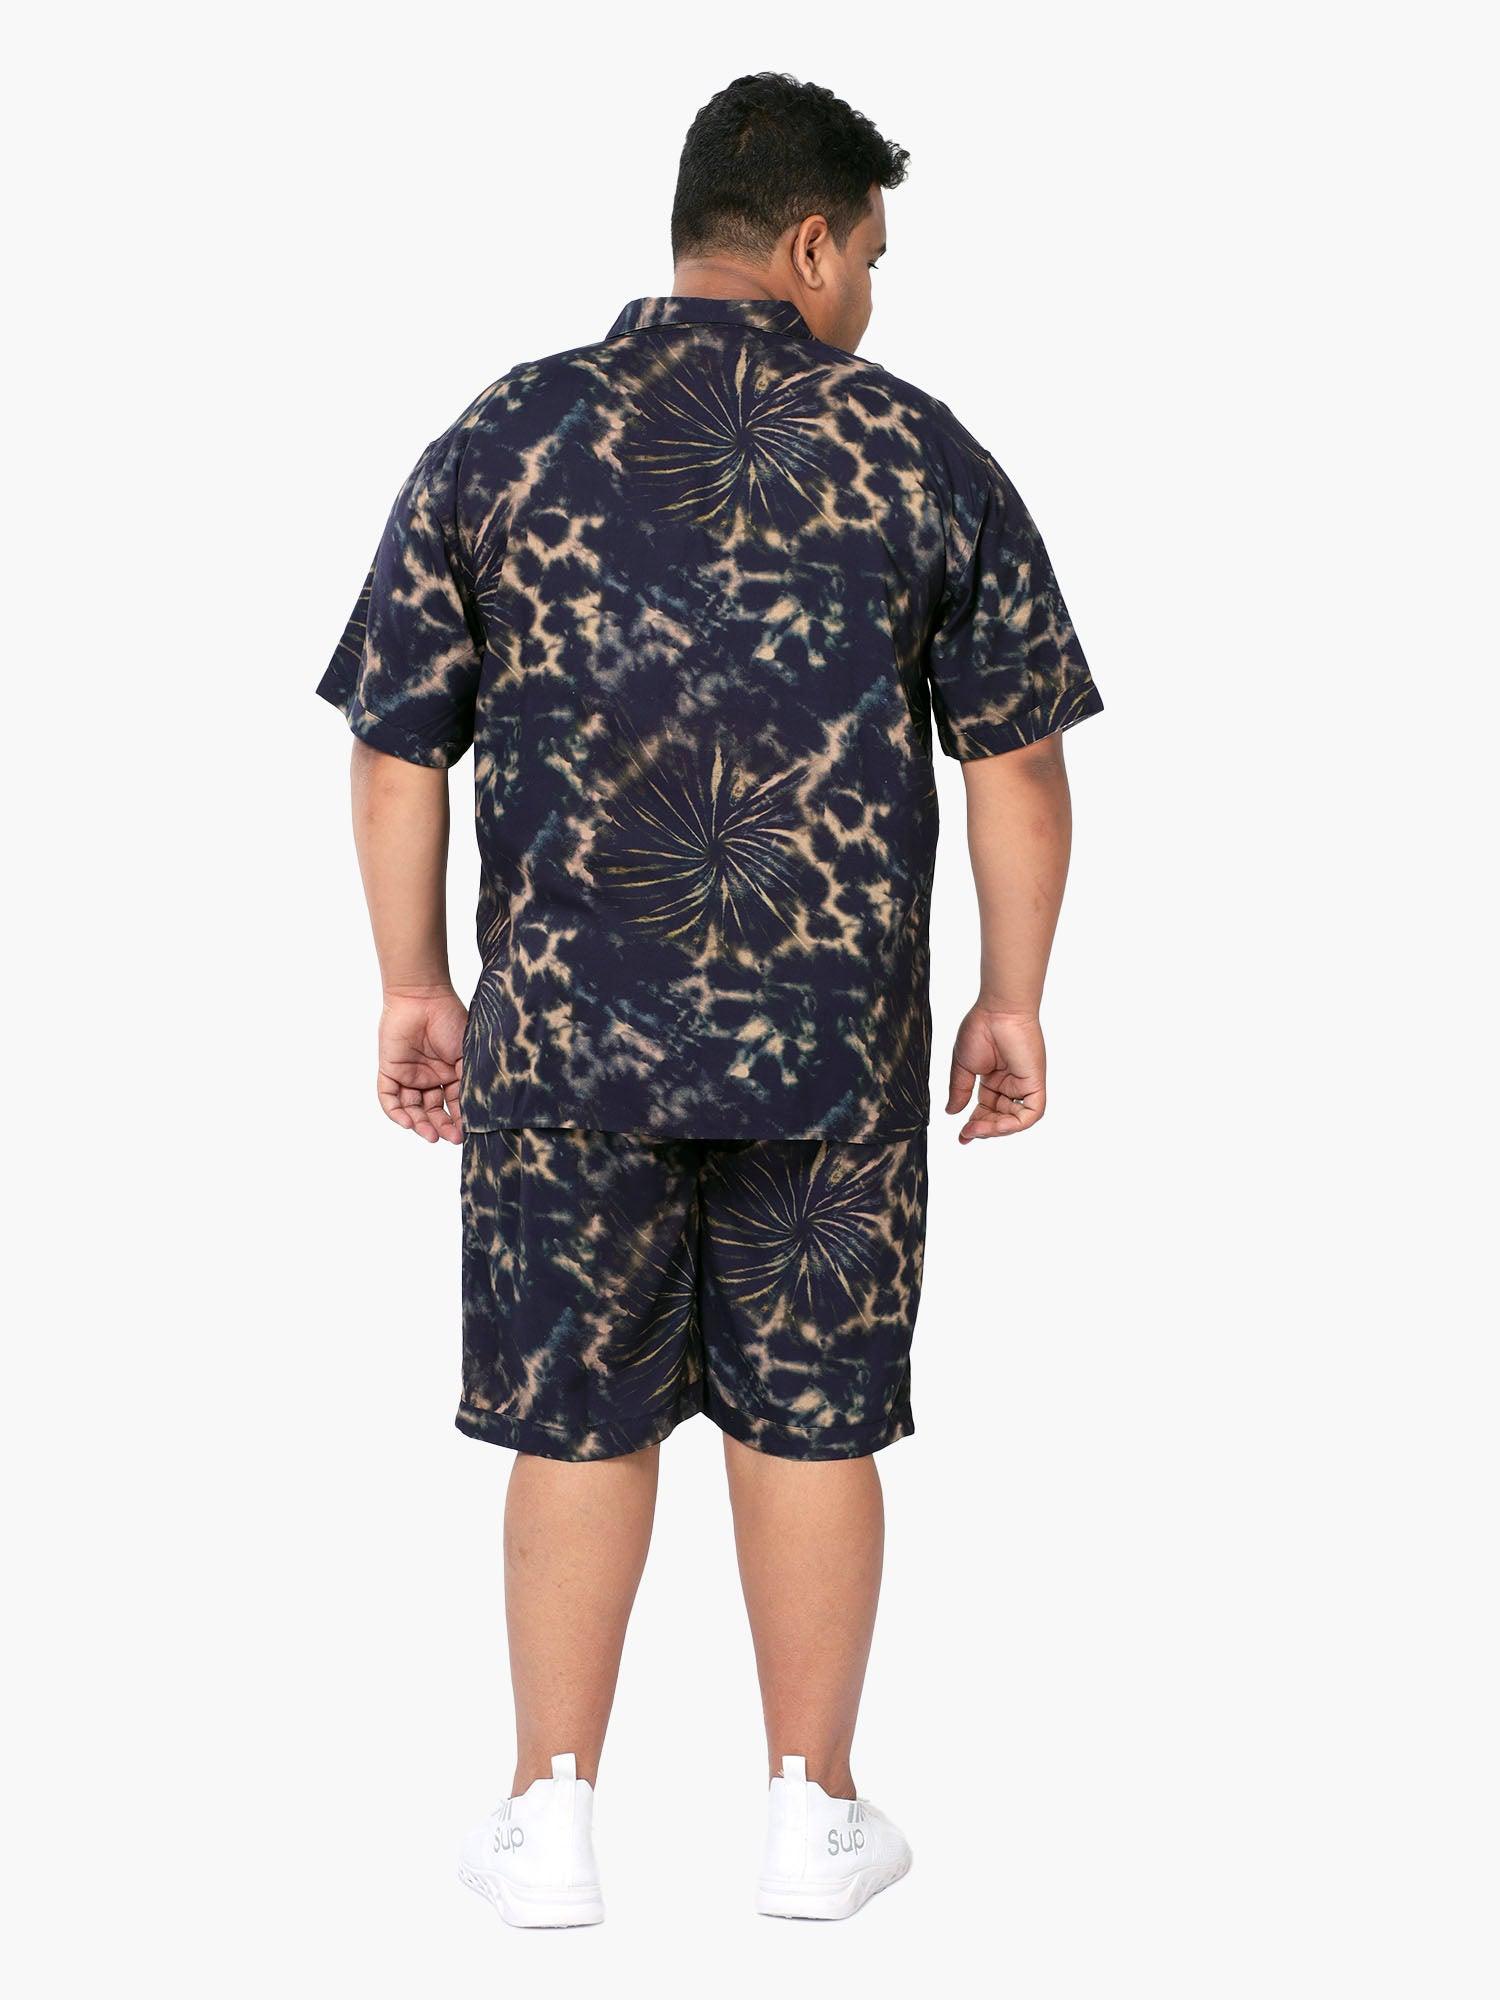 Plus Size Men Navy Tie Dye Half Sleeve Co-Ords - Guniaa Fashions